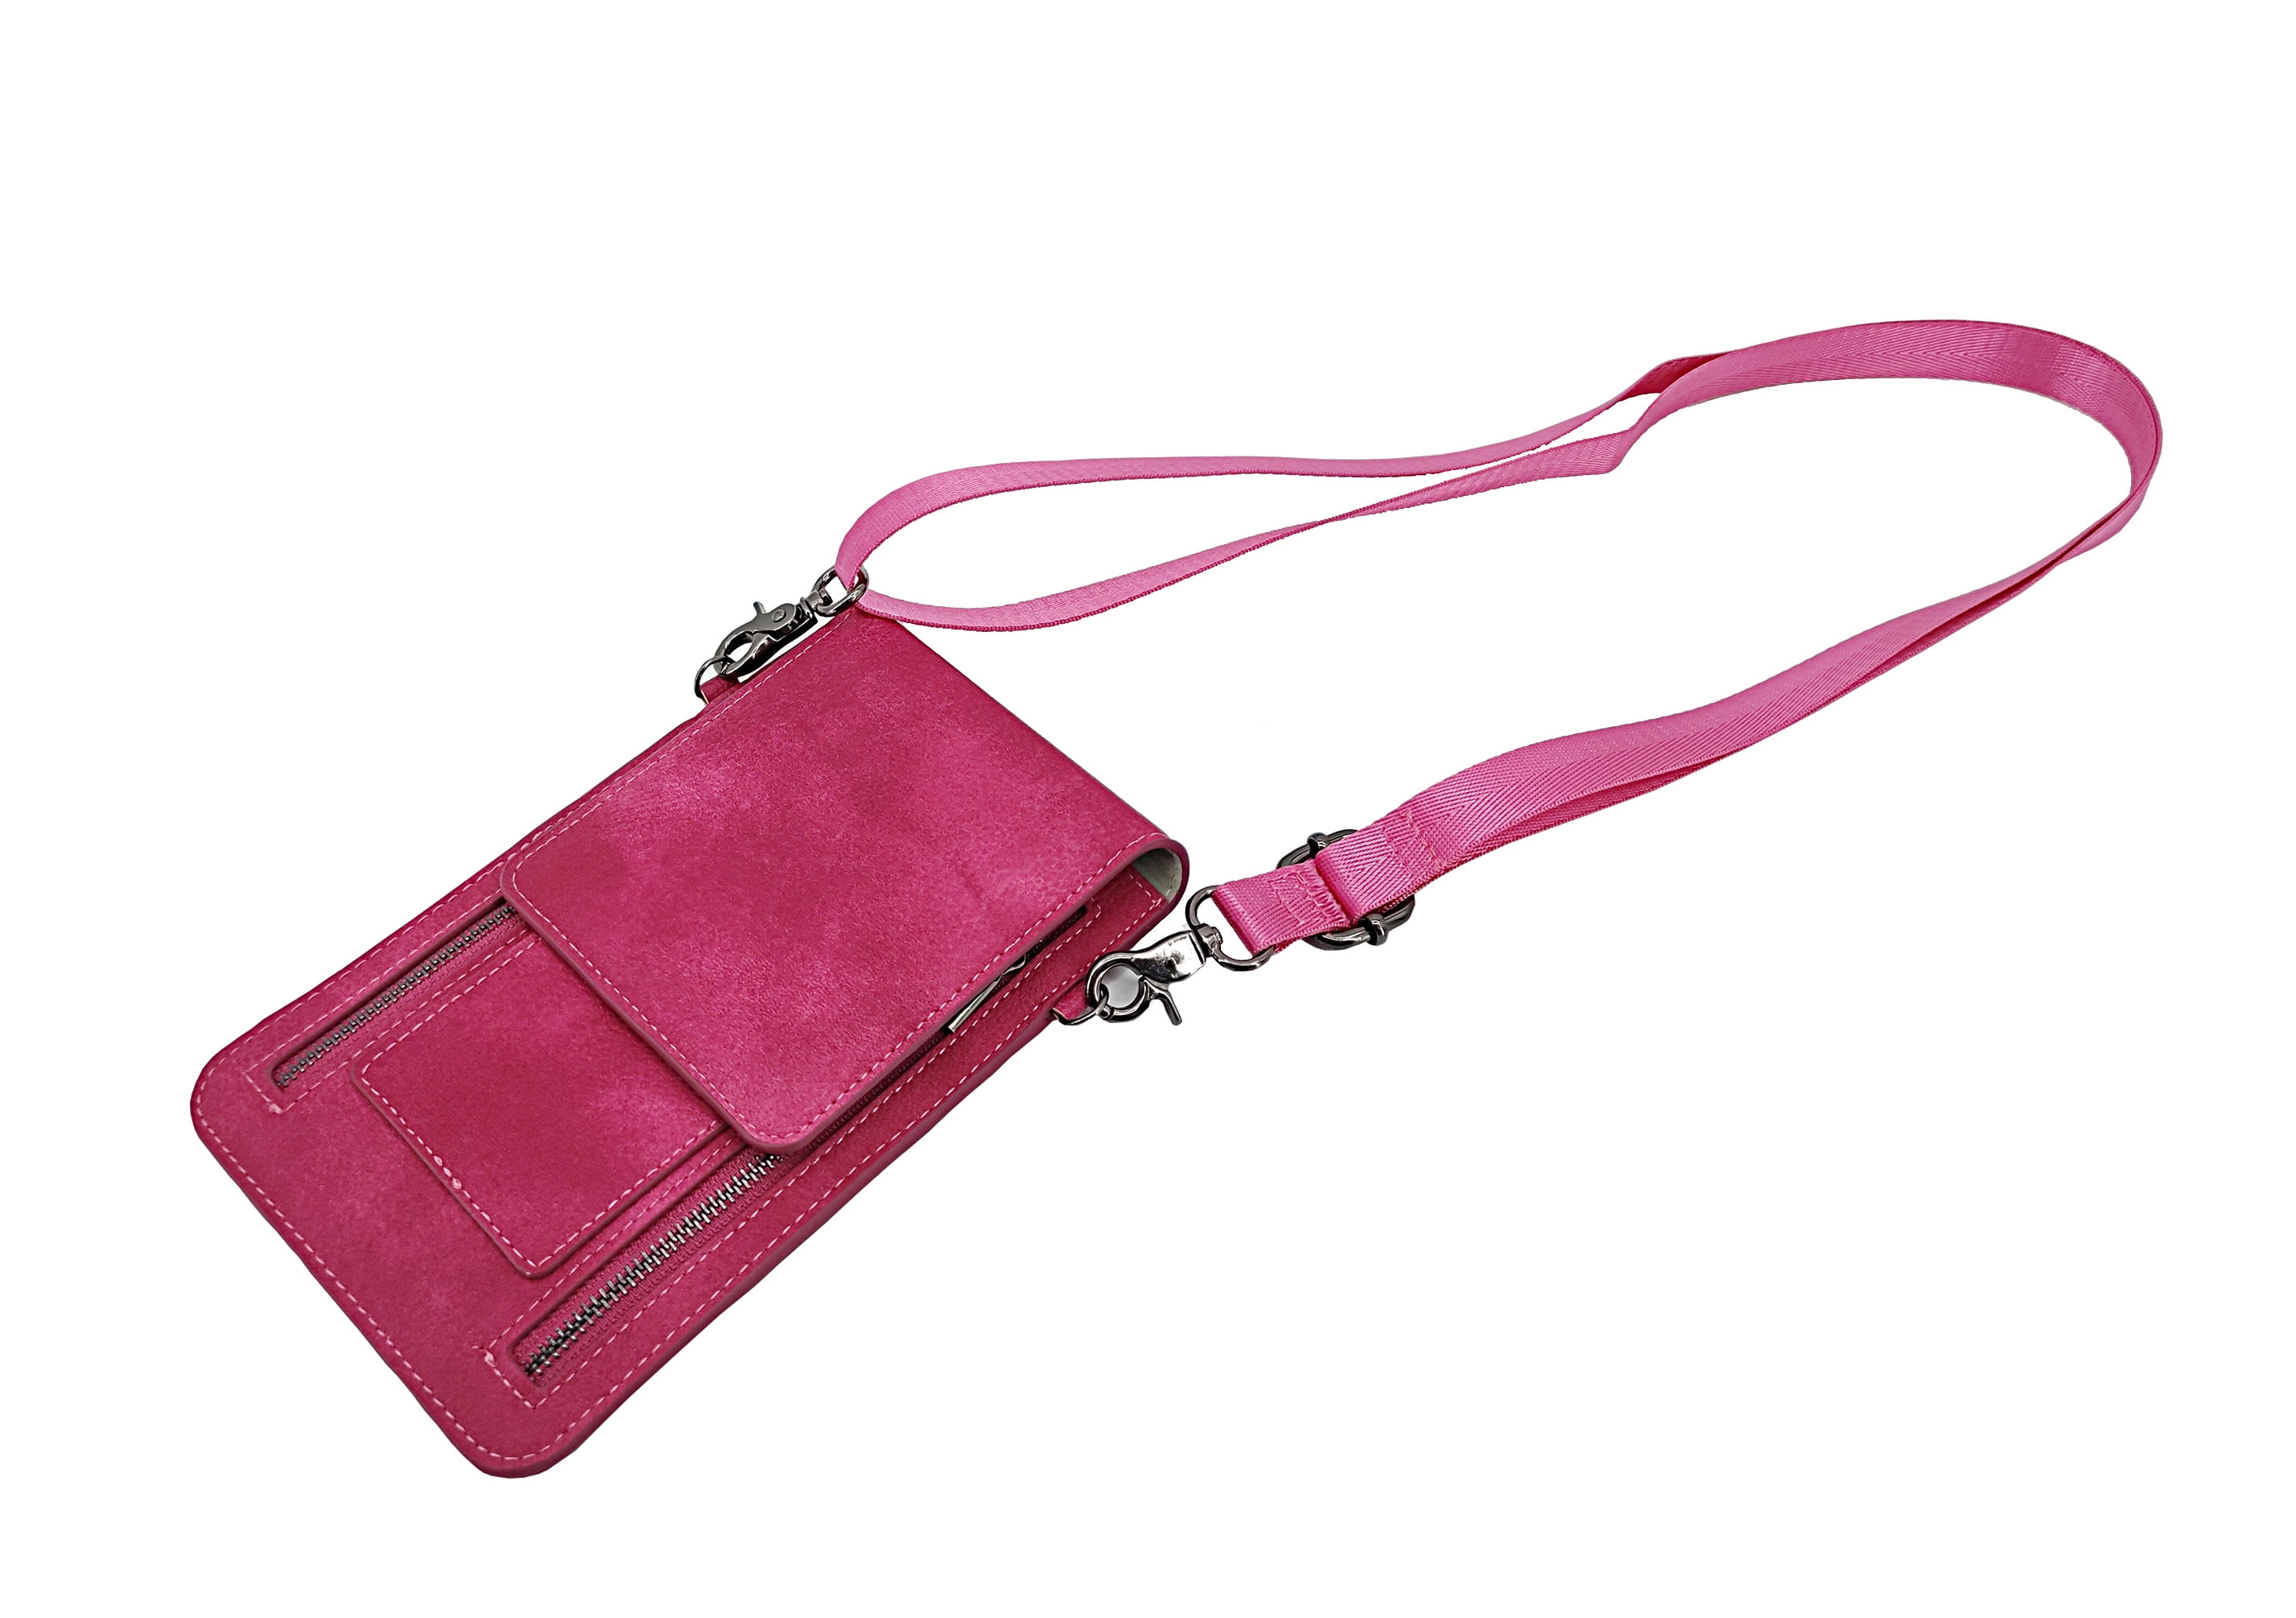 Fixturedisplays Cell Phone Purse Shoulder Bag Women Girl Sythetic Suede Leather Tan Color Handbag with Adjustable Strap 15355-tan